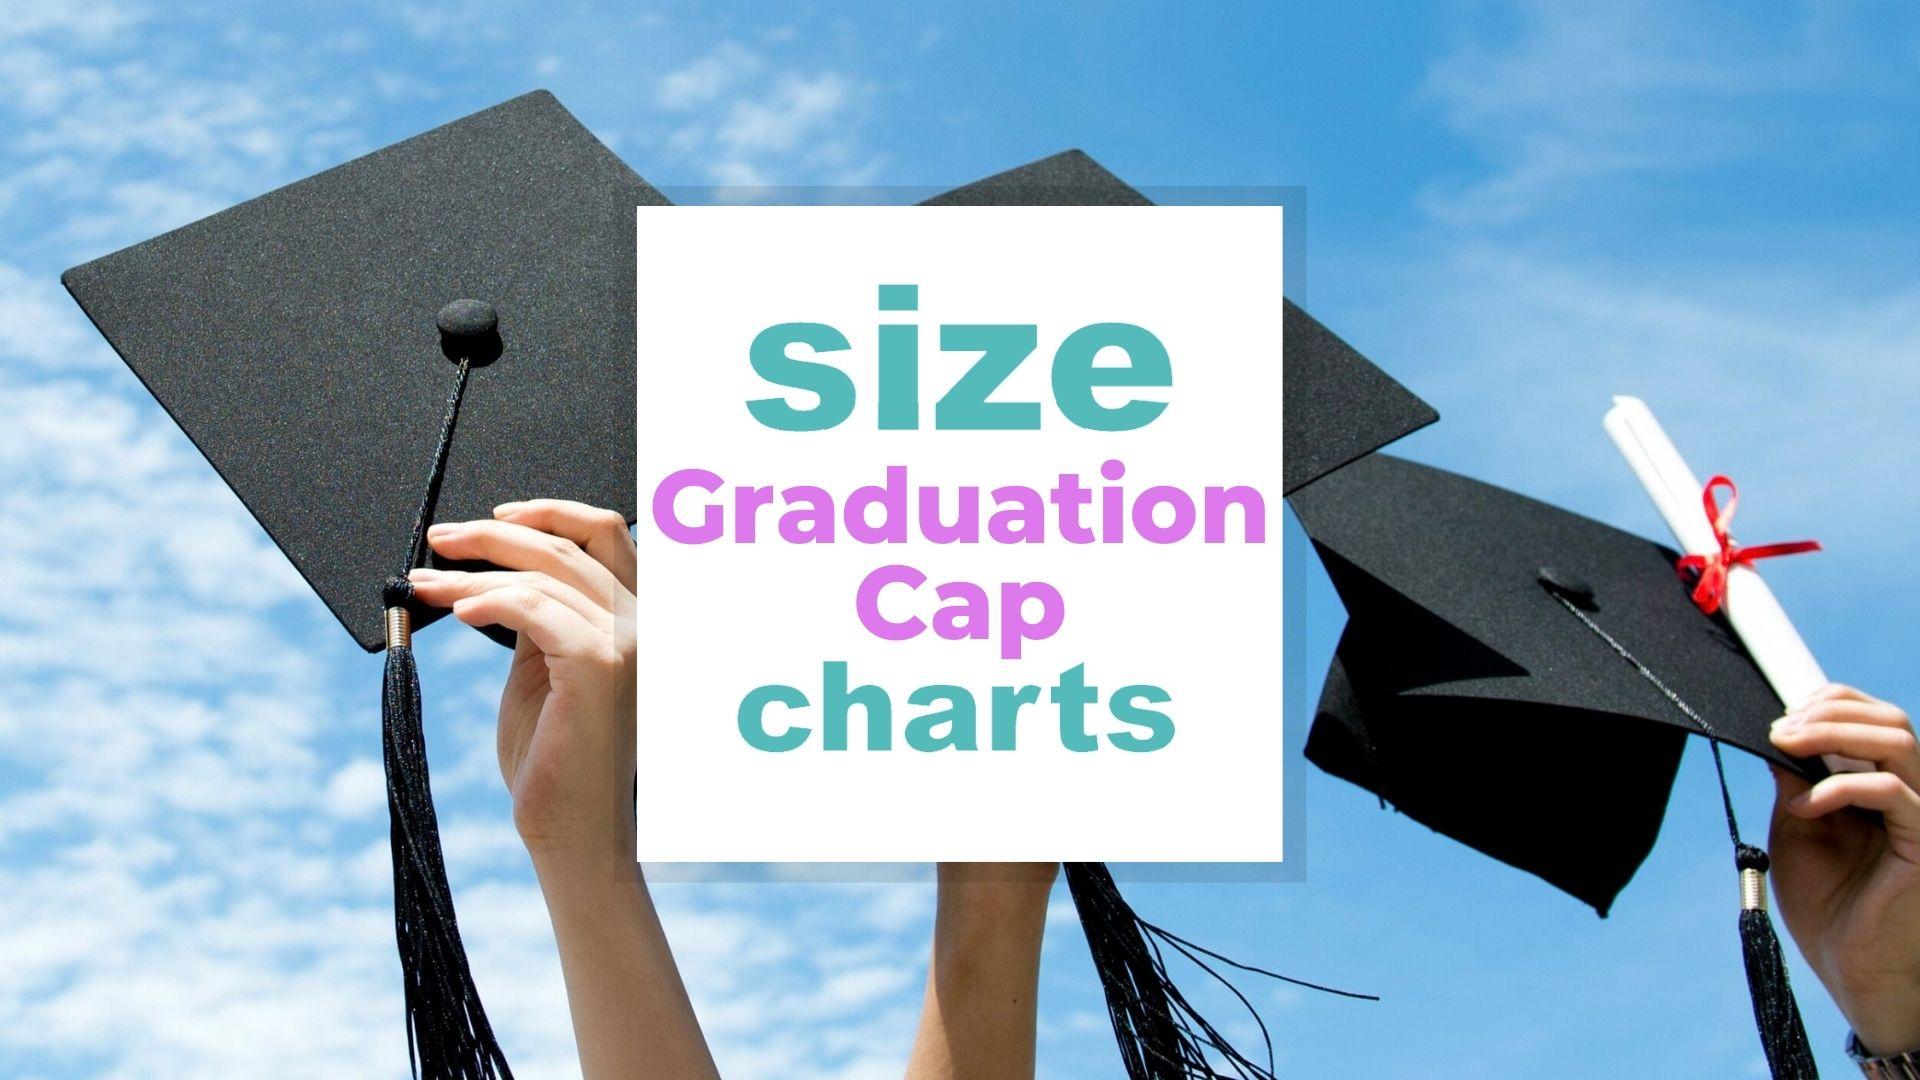 Graduation Cap Size Chart and Dimensions